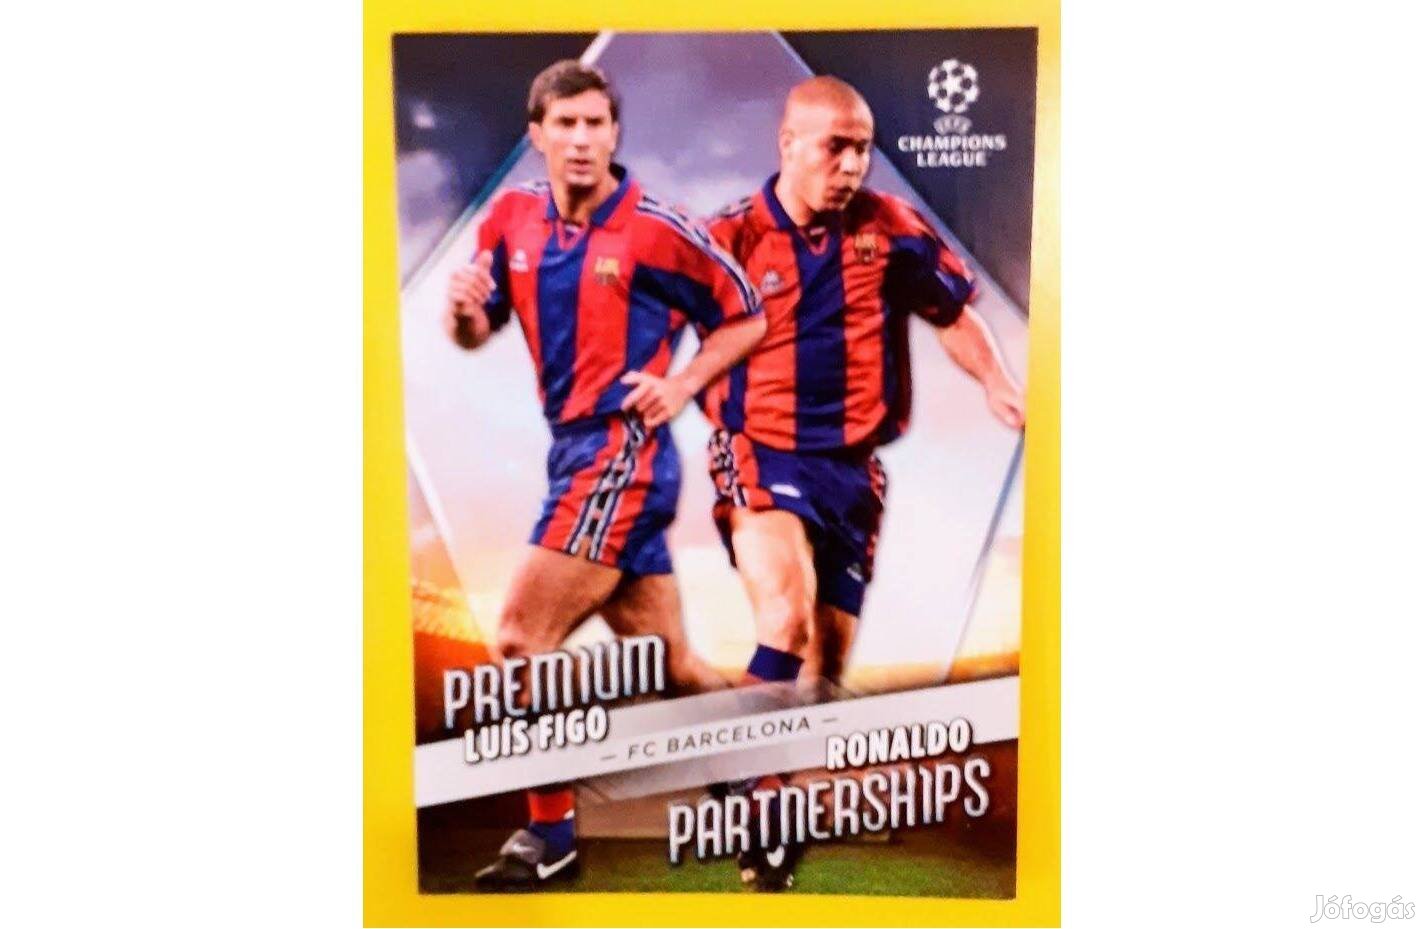 Luis Figo Ronaldo Barcelona Premium Partnership focis kártya Topps